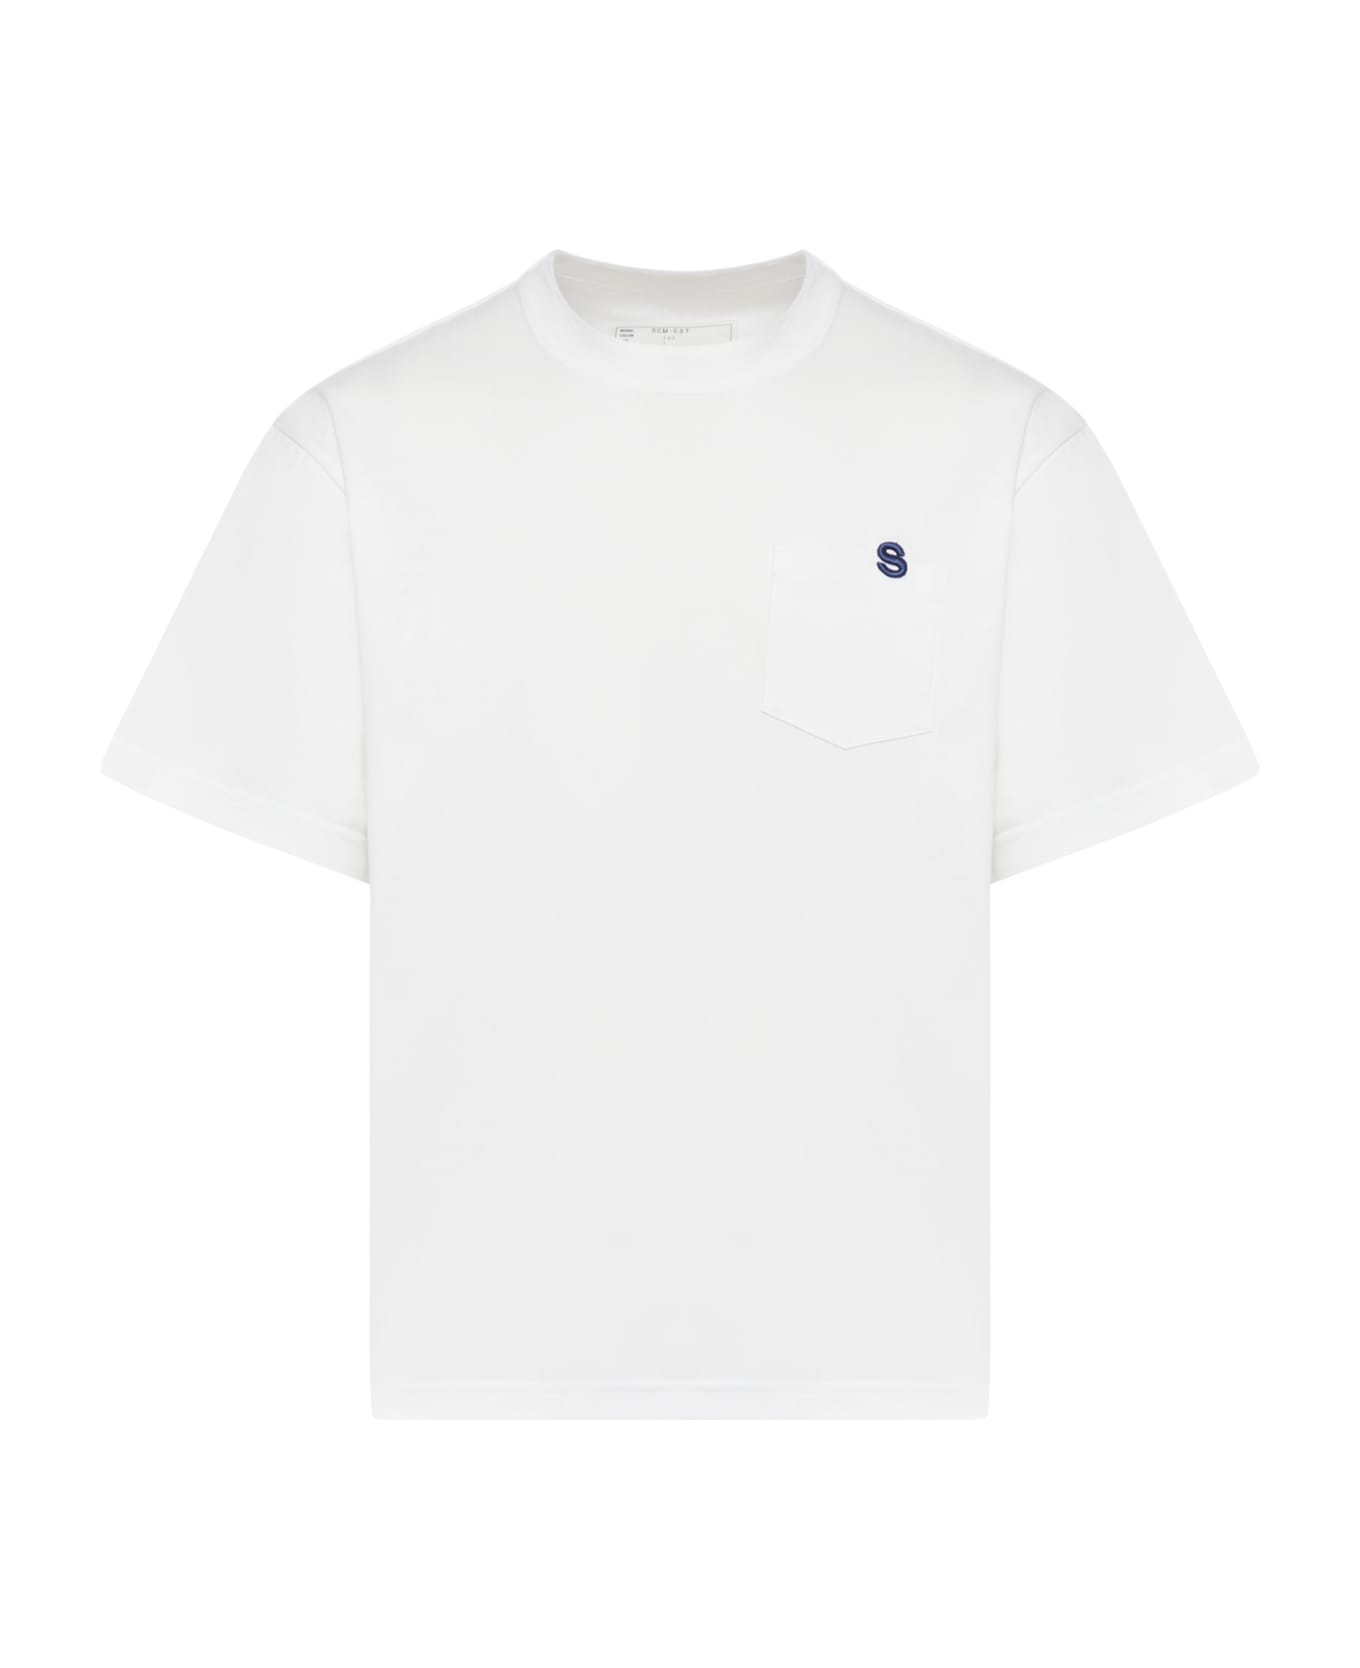 Sacai S Cotton Jersey T-shirt - White シャツ